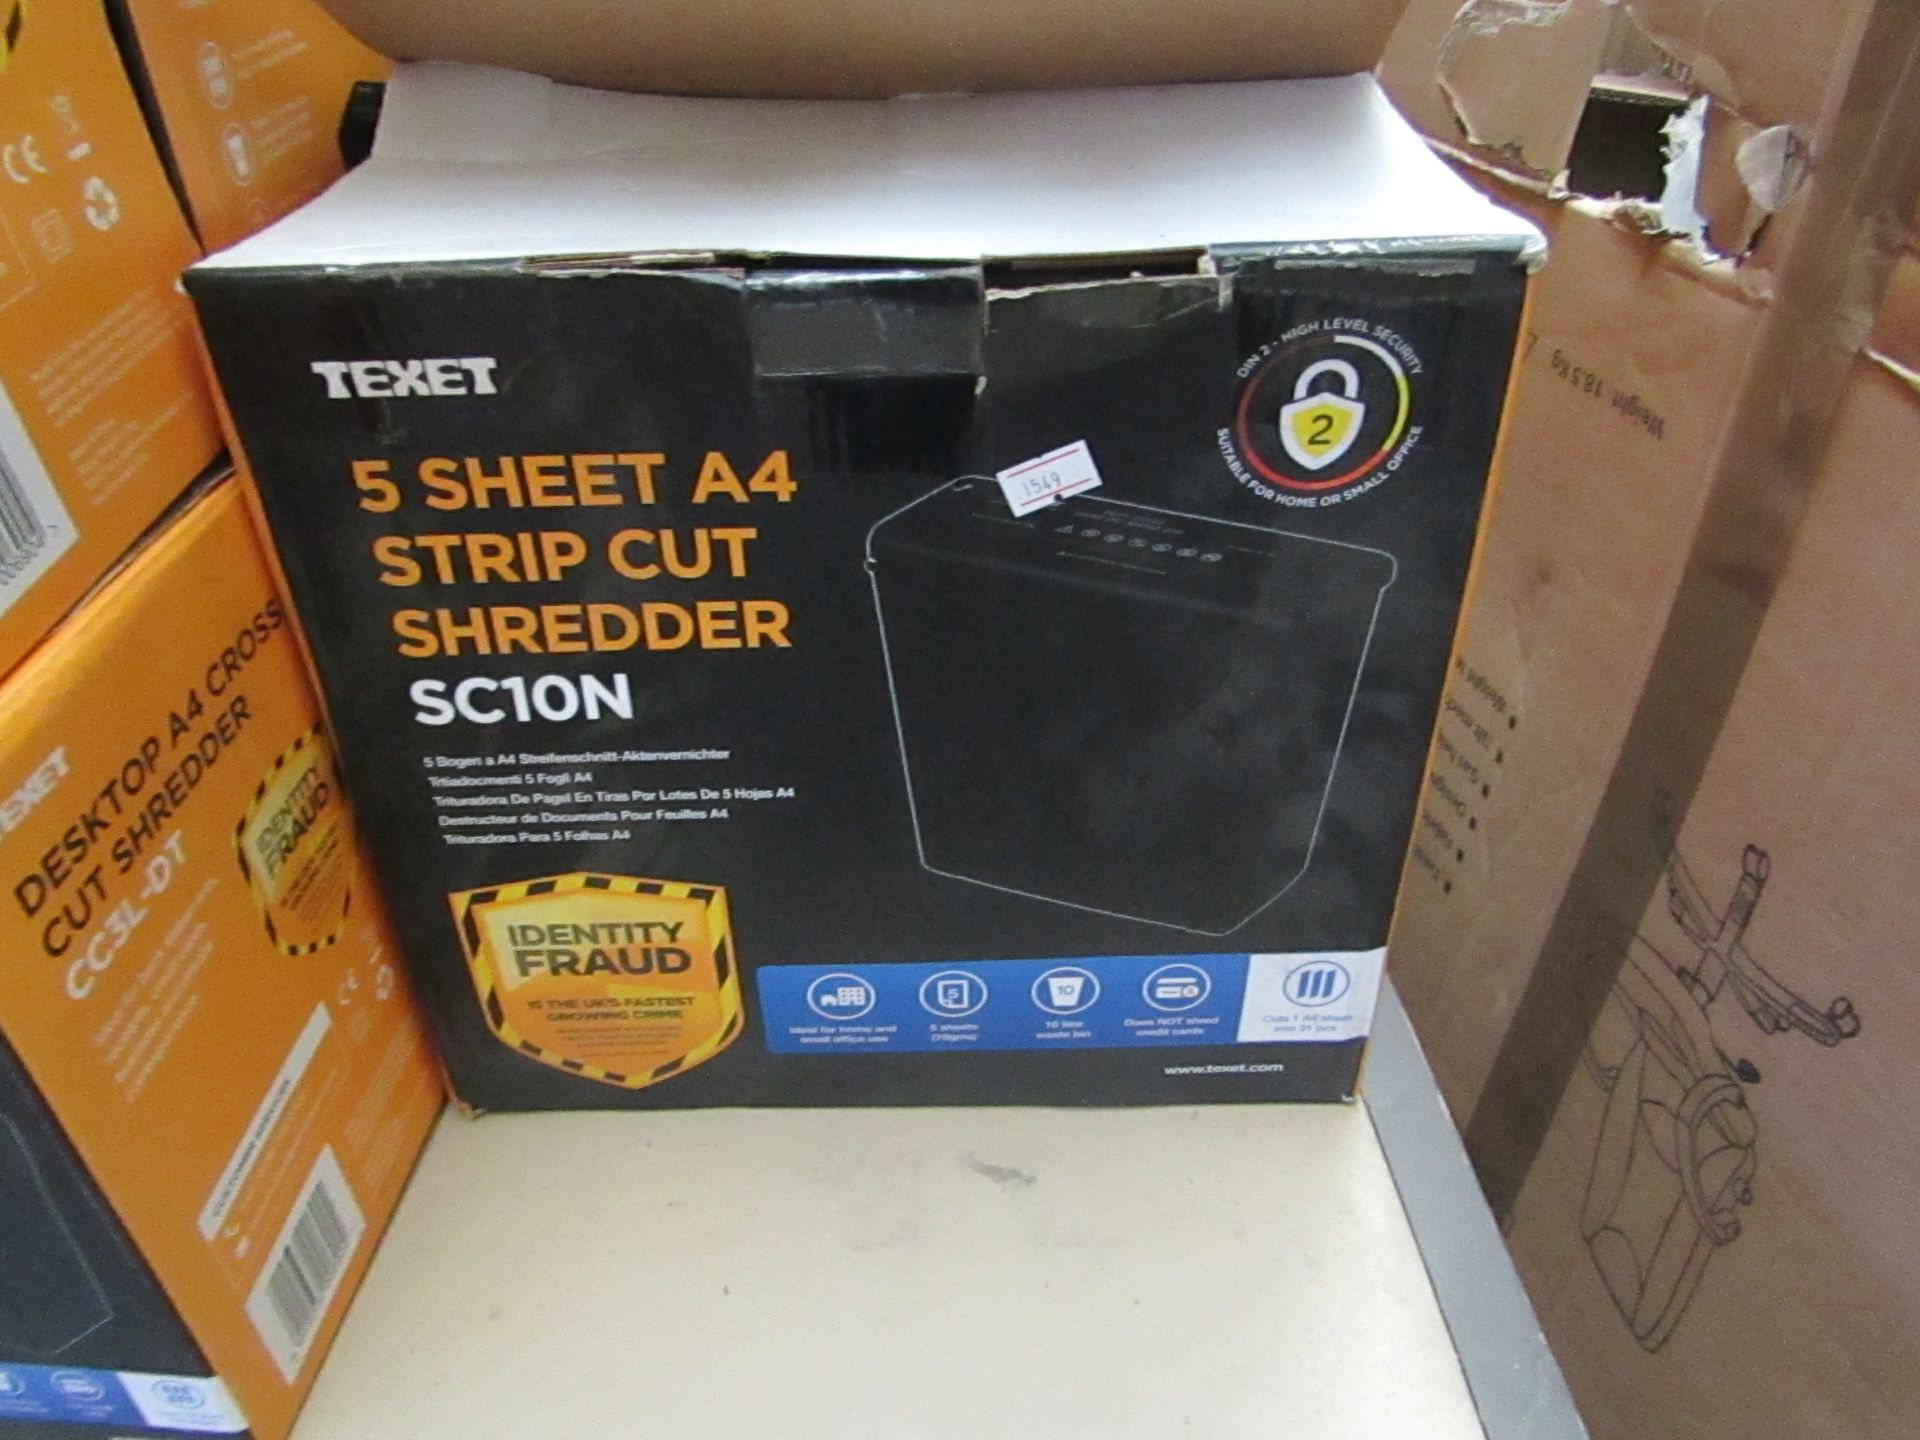 Texet 5 sheet a4 Strip cut shredder, unchecked & Boxed